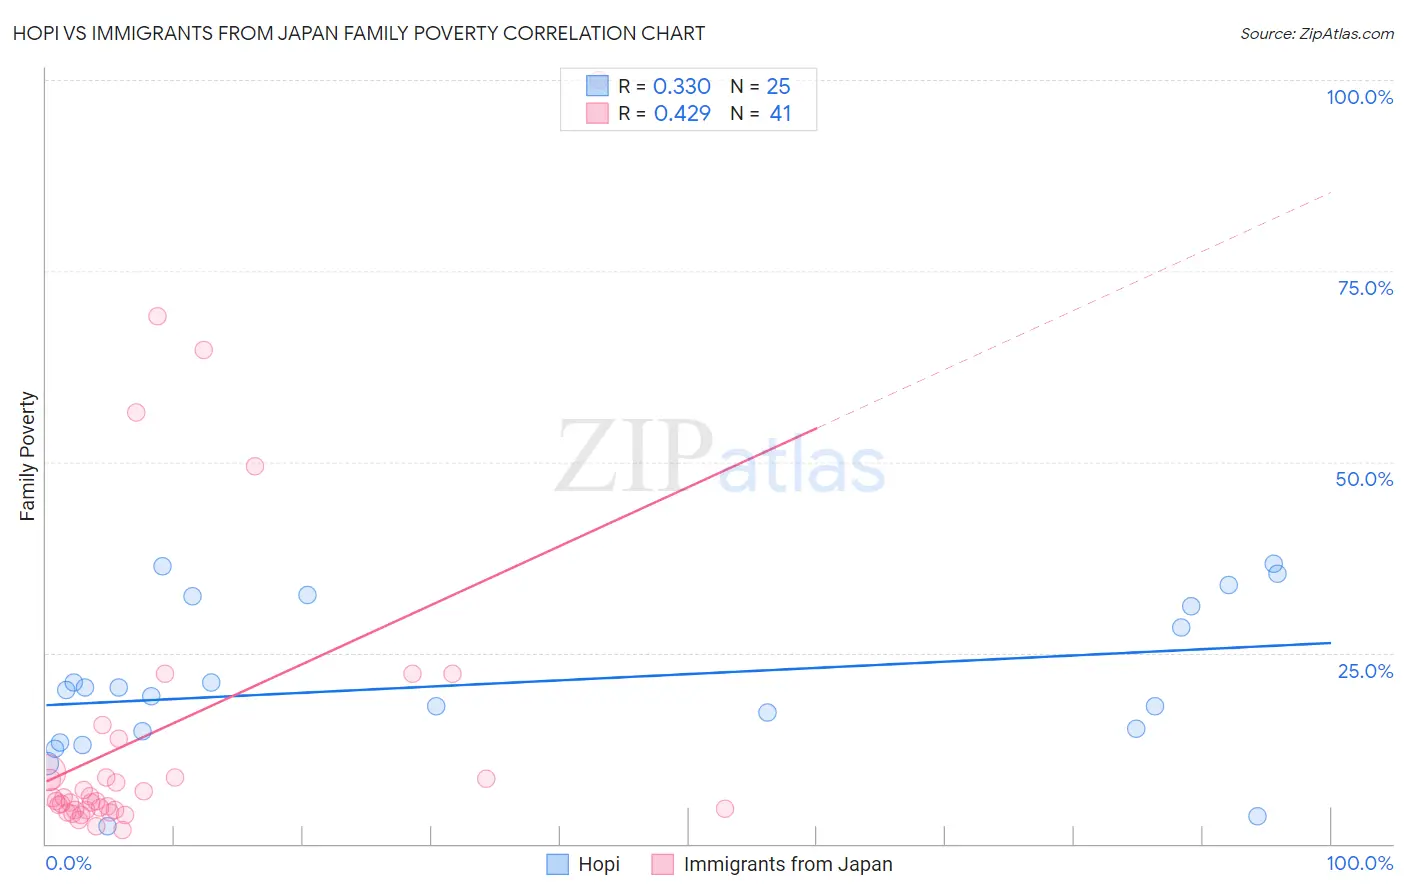 Hopi vs Immigrants from Japan Family Poverty